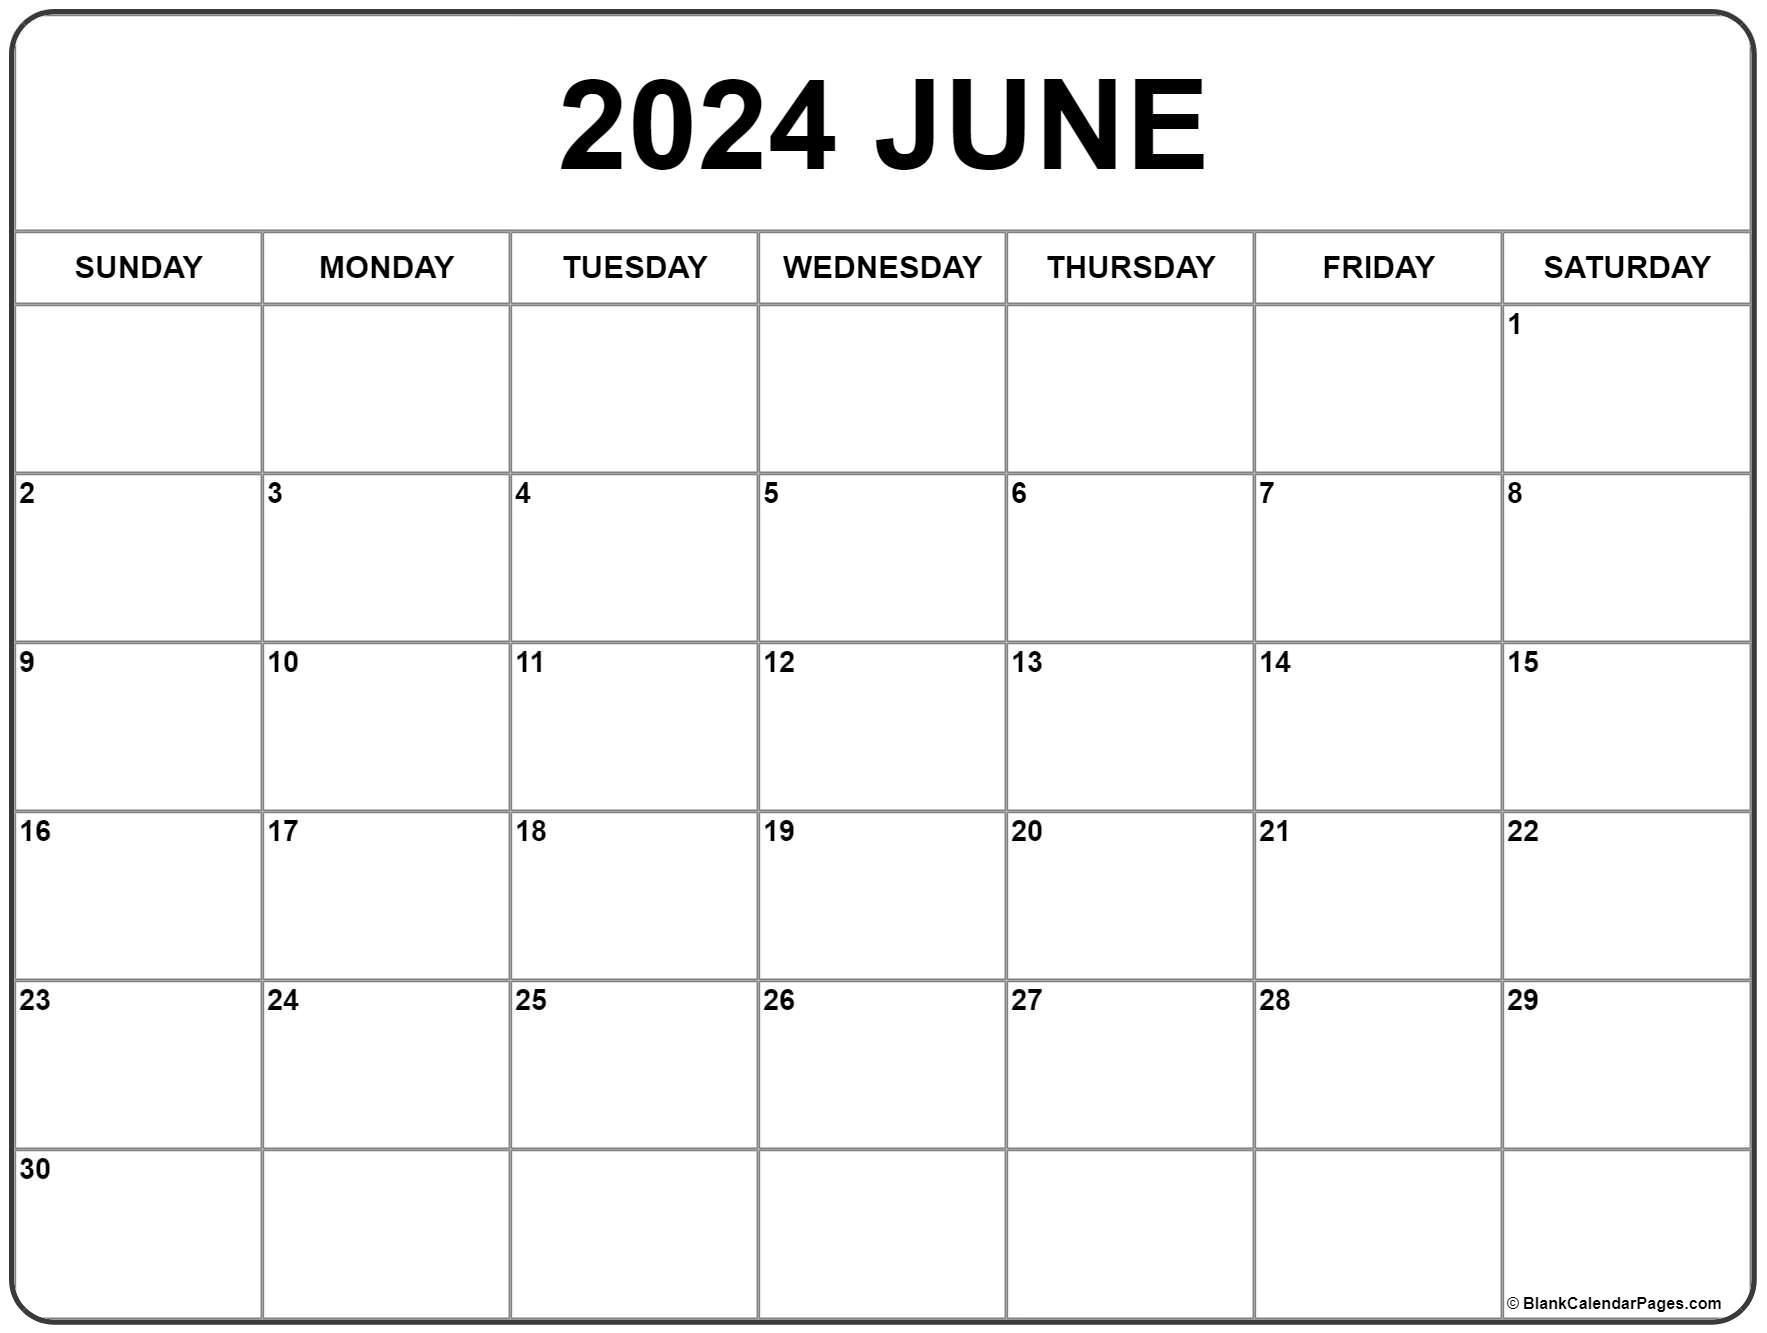 2021 June Calendar Printable June 2021 calendar | free printable monthly calendars